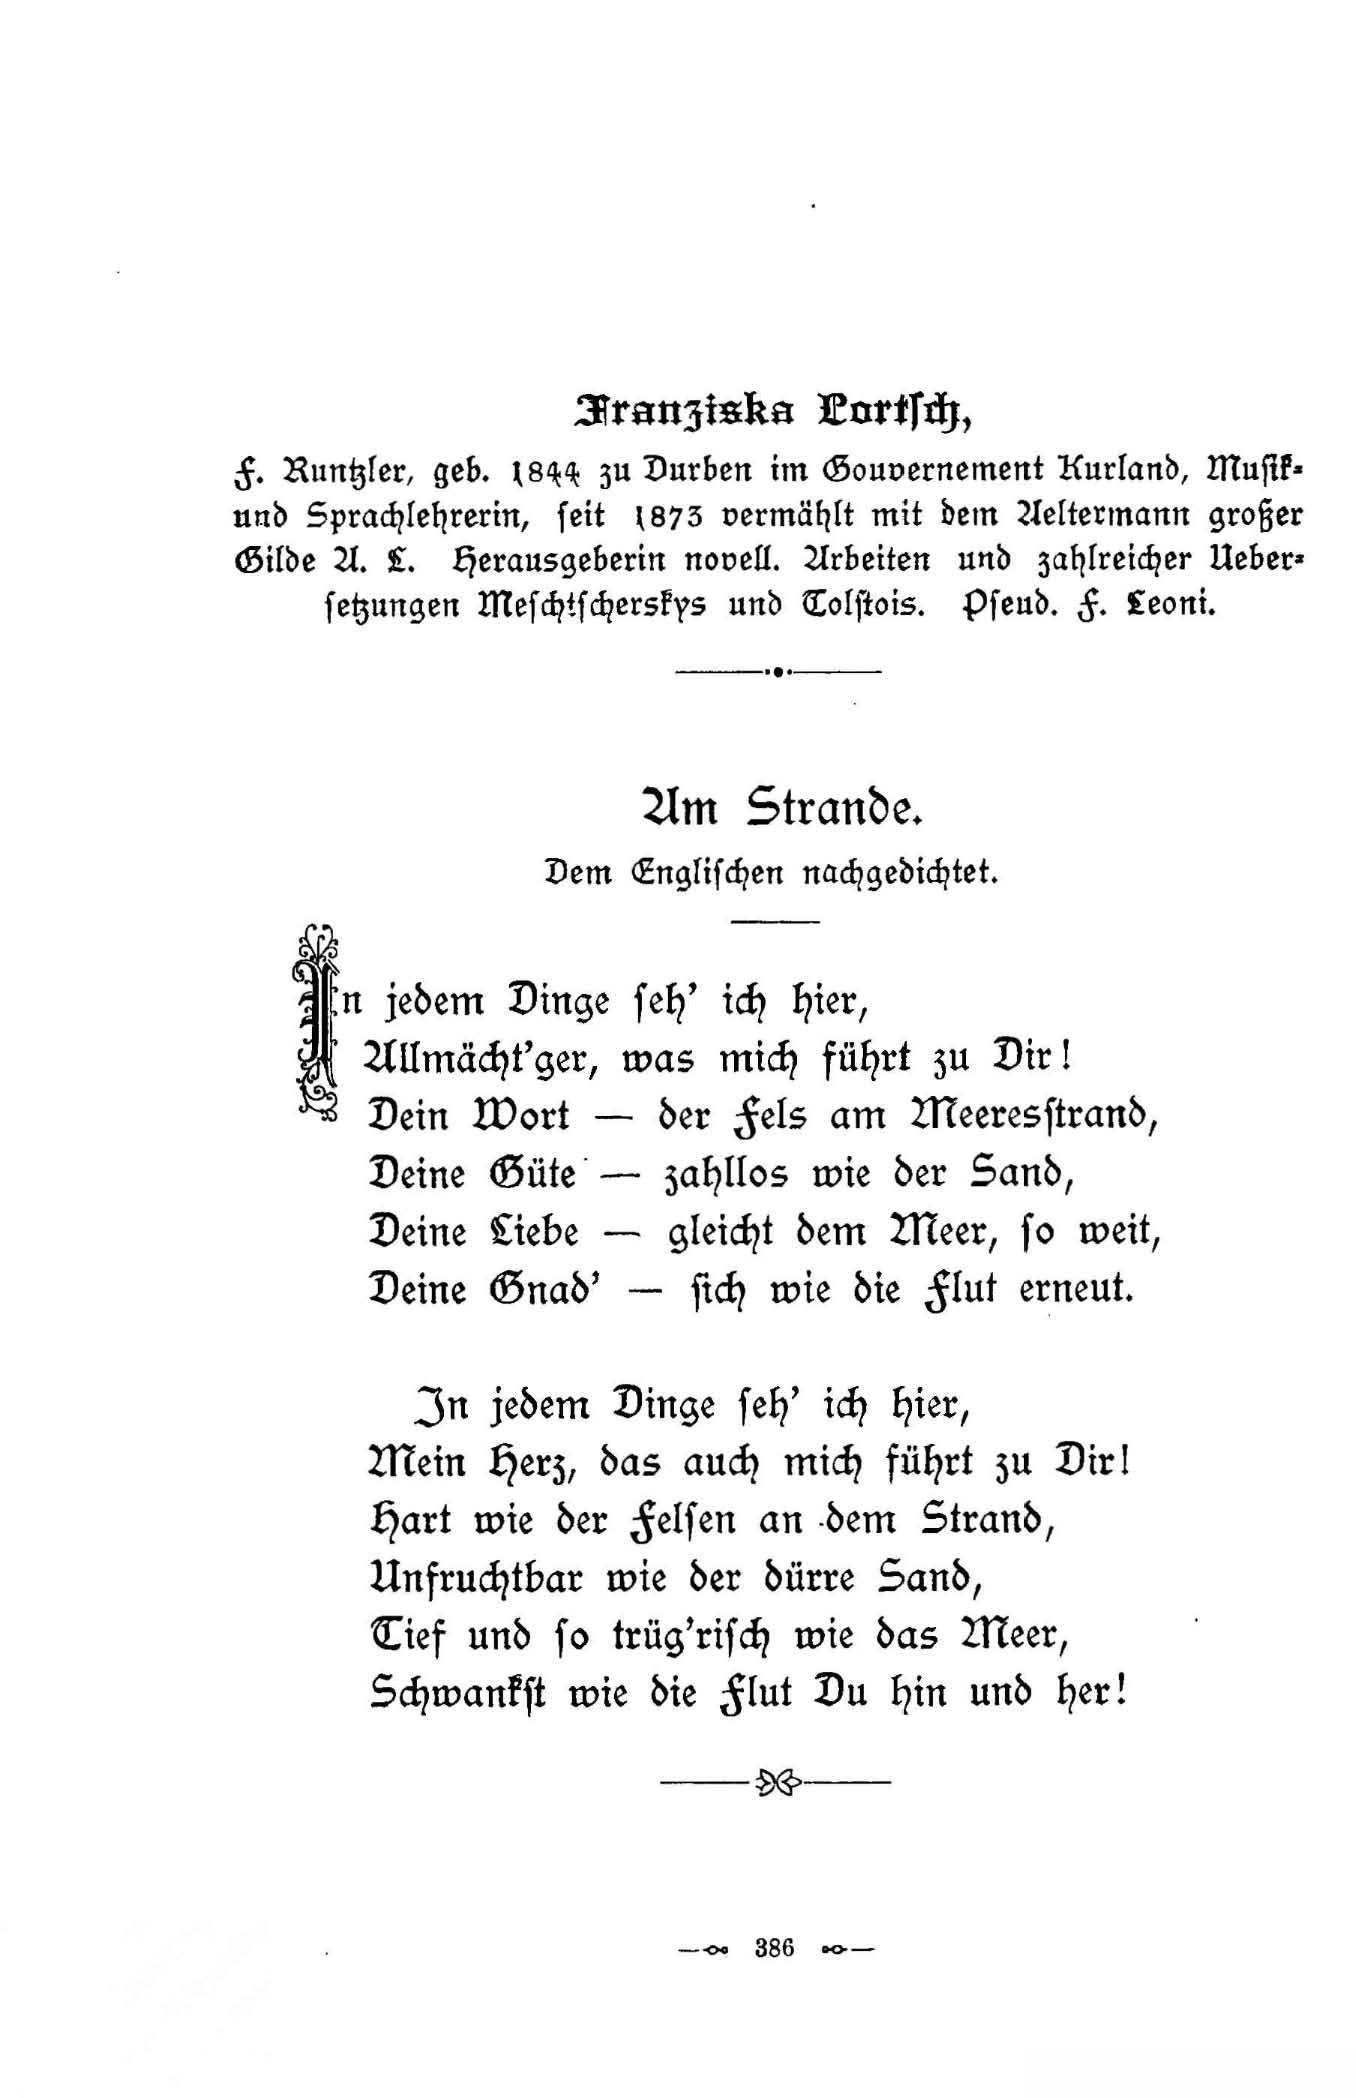 Am Strande (1896) | 1. (386) Haupttext